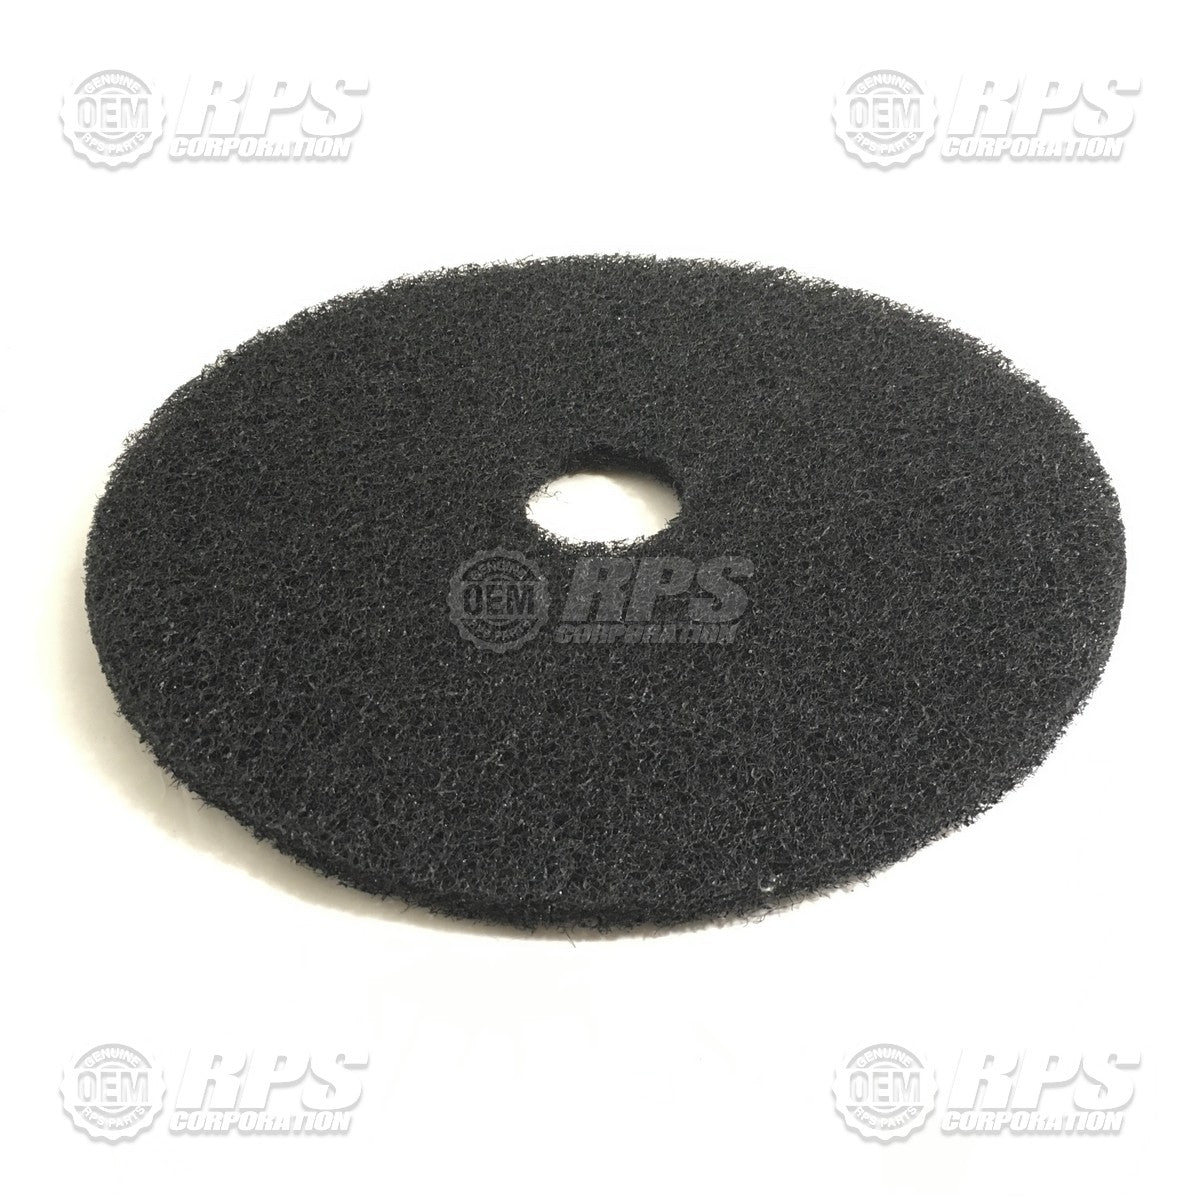 FactoryCat/Tomcat 14-422BB, Floor Pads, 14" Super Black - Case of 5 pads